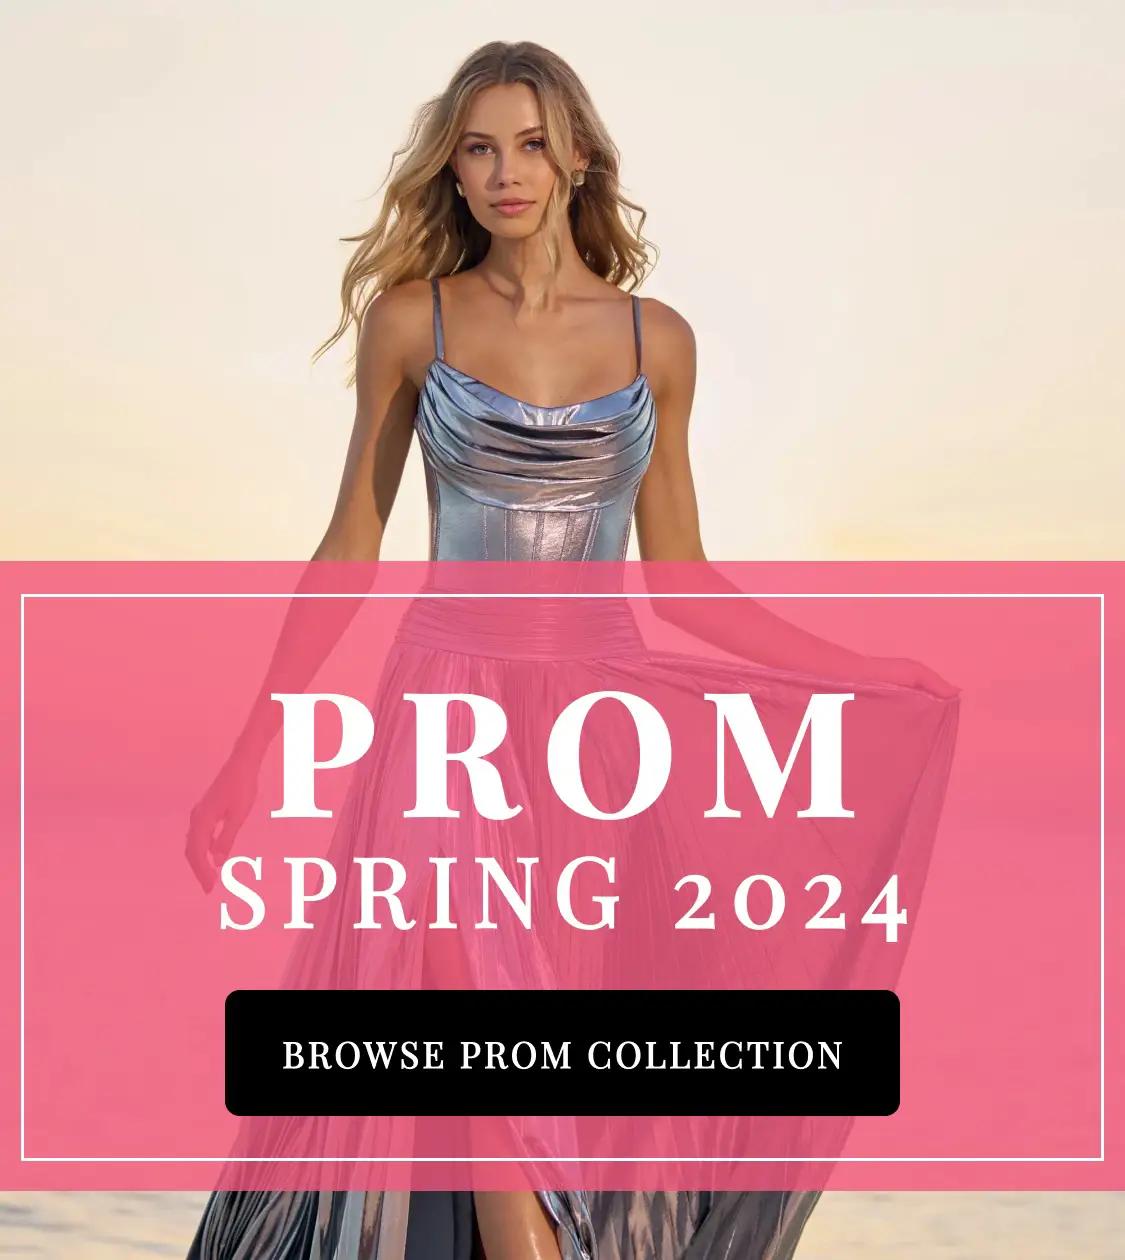 Prom Spring 2024 banner mobile